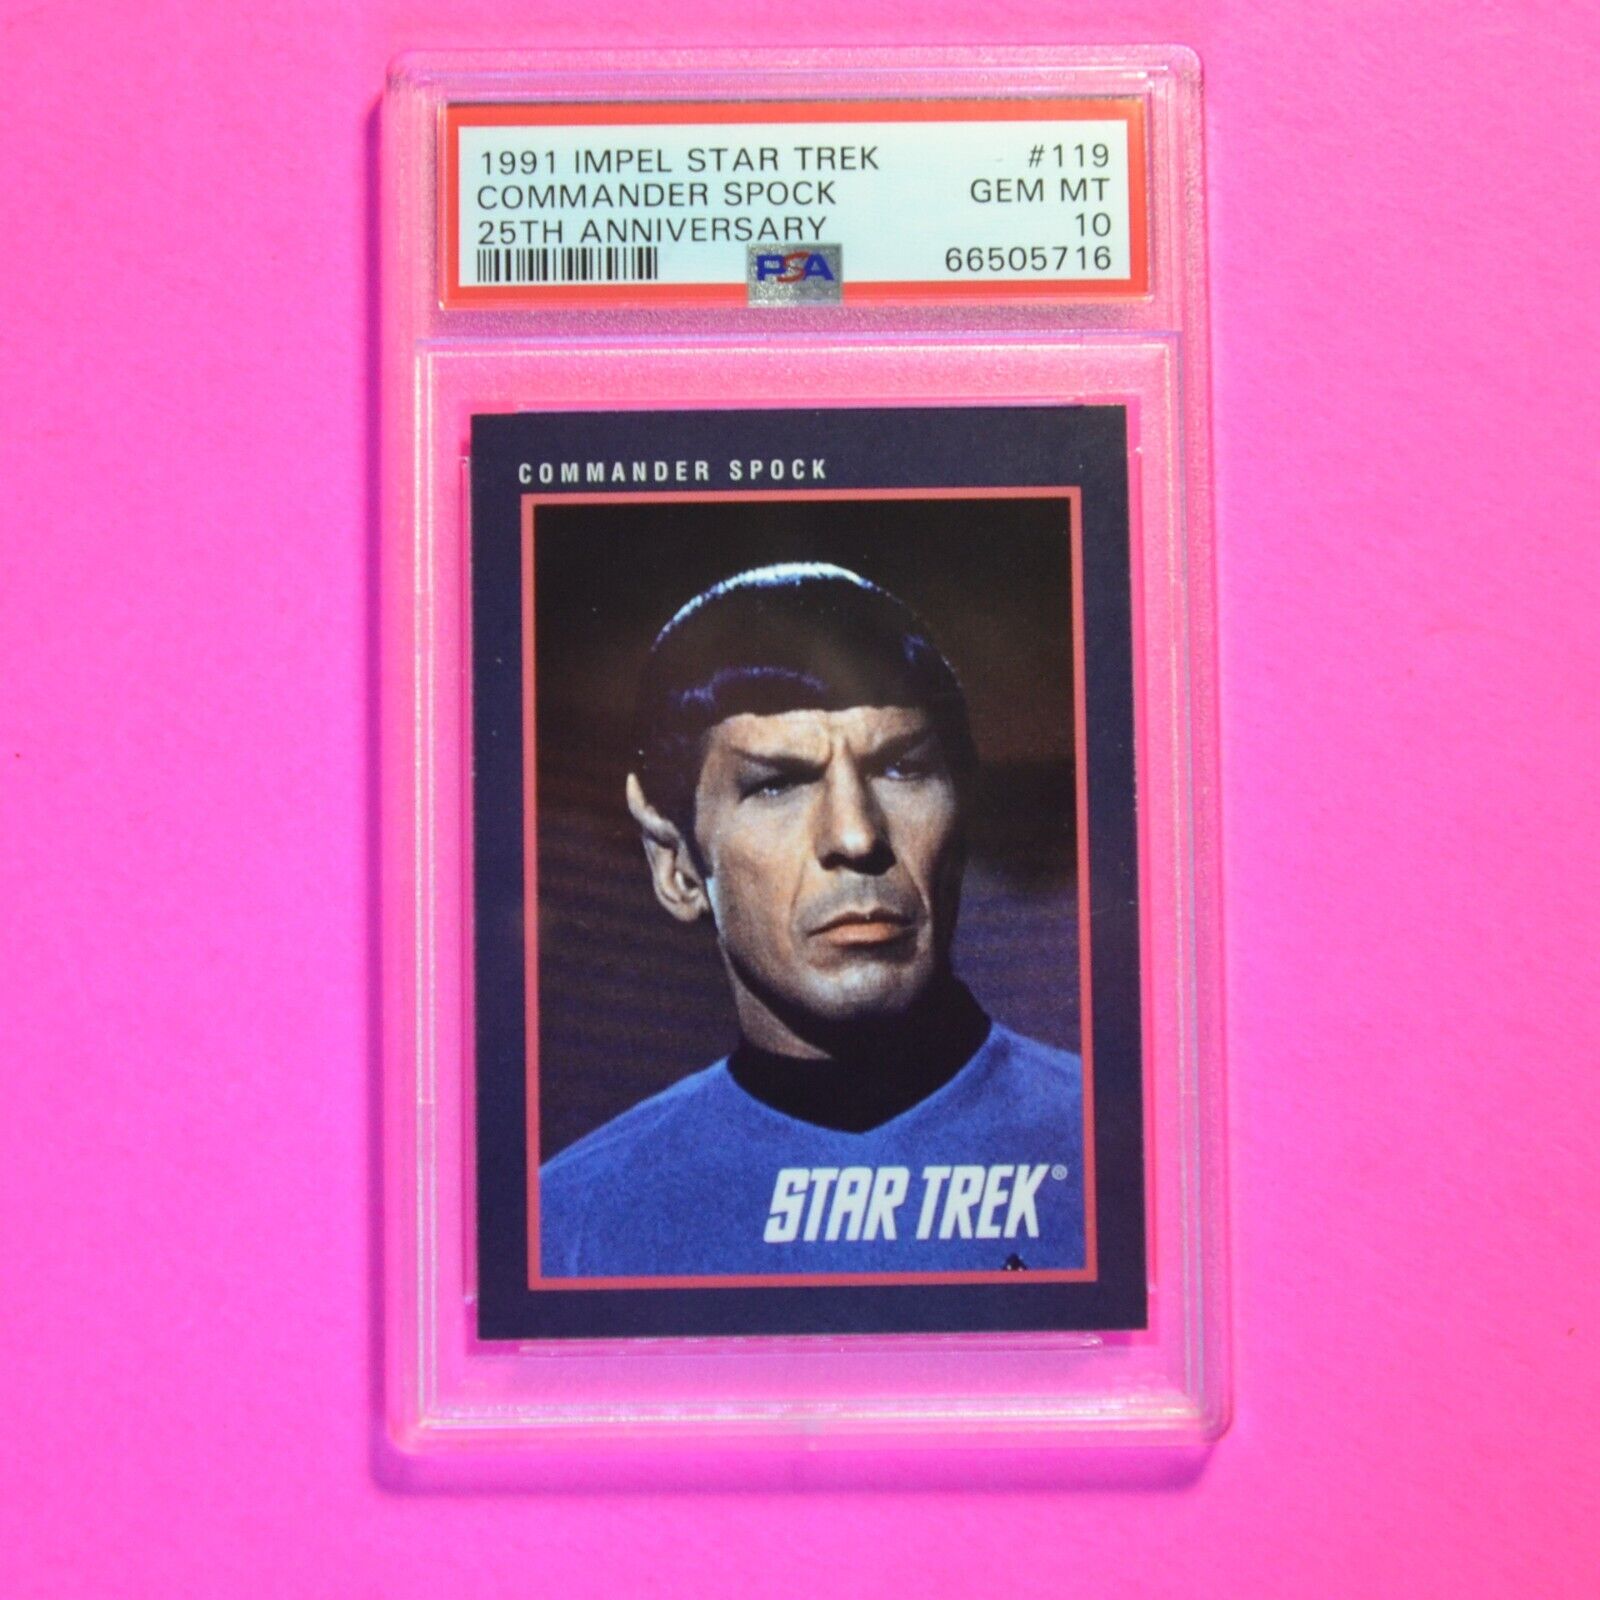 1991 Impel Star Trek 25th #119 Commander Spock - PSA 10 Gem mint (pop 2)